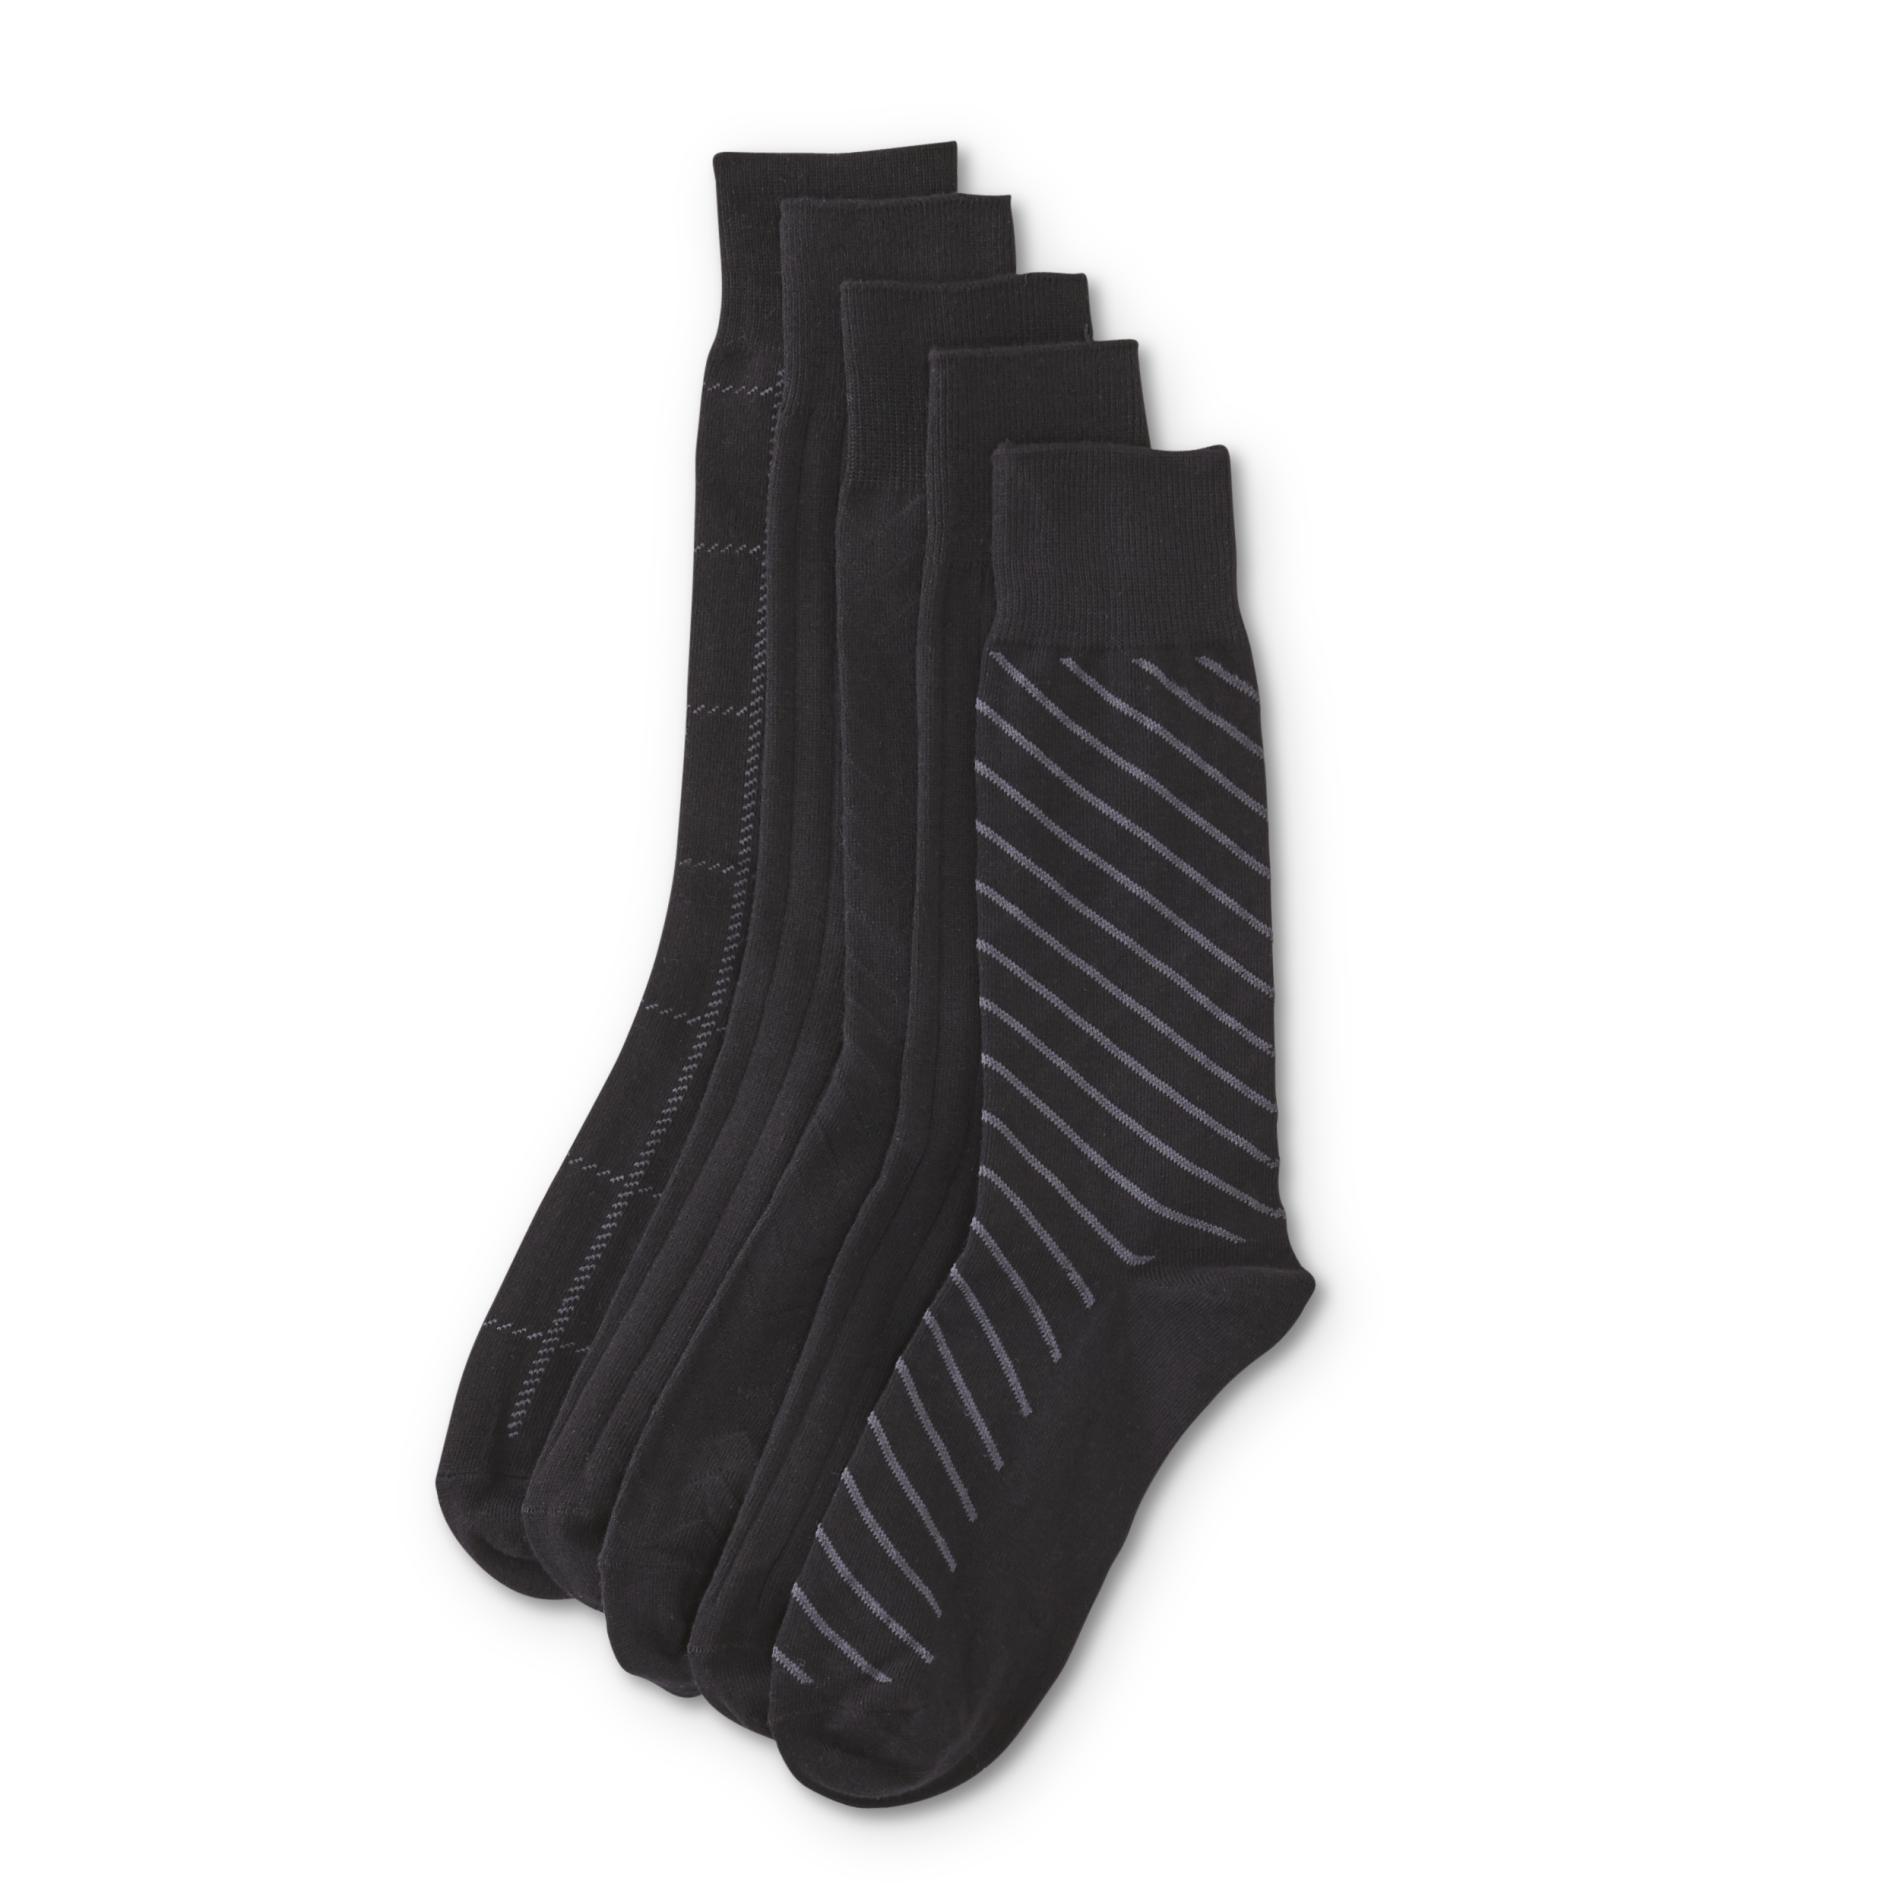 Basic Editions Men's 5-Pairs Dress Socks - Striped, Plaid & Textured